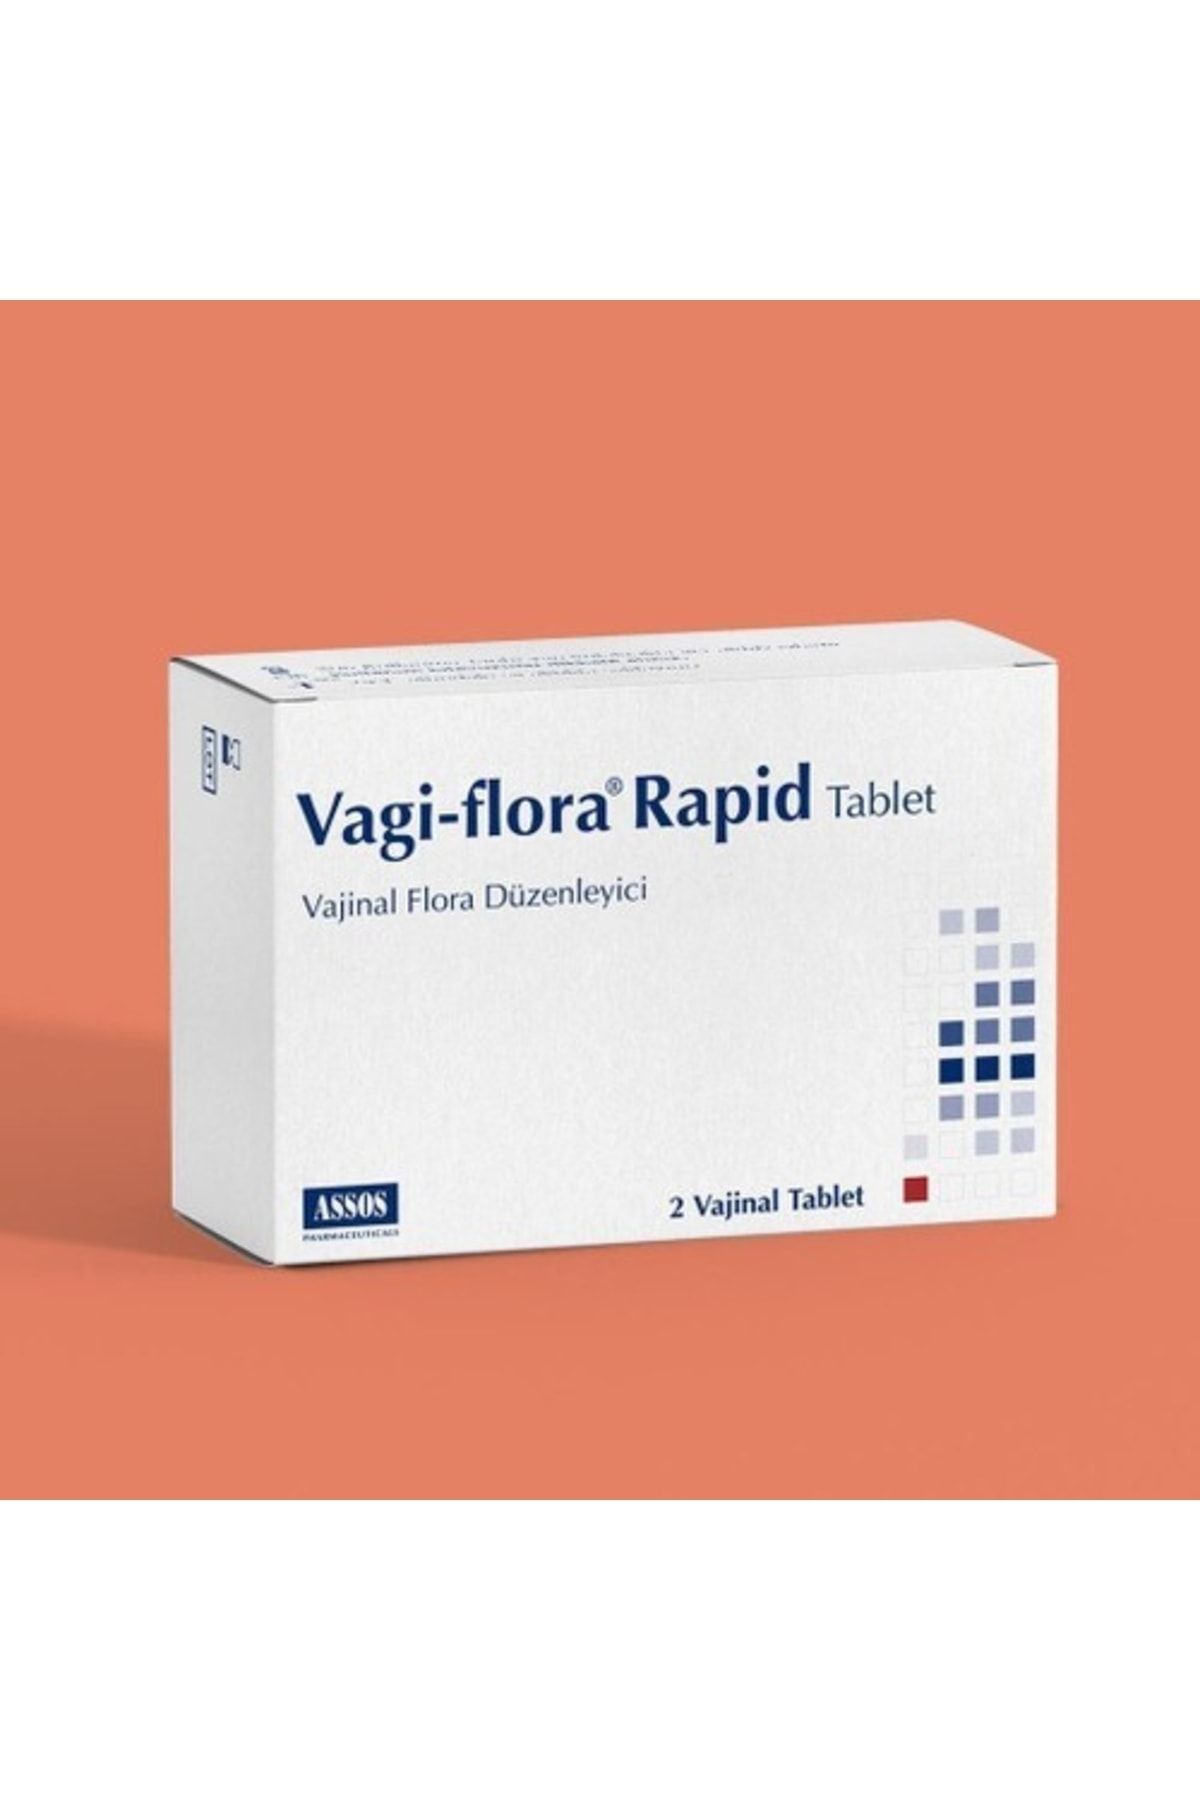 Assos Vagi-flora Rapid 2 Vajinal Tablet